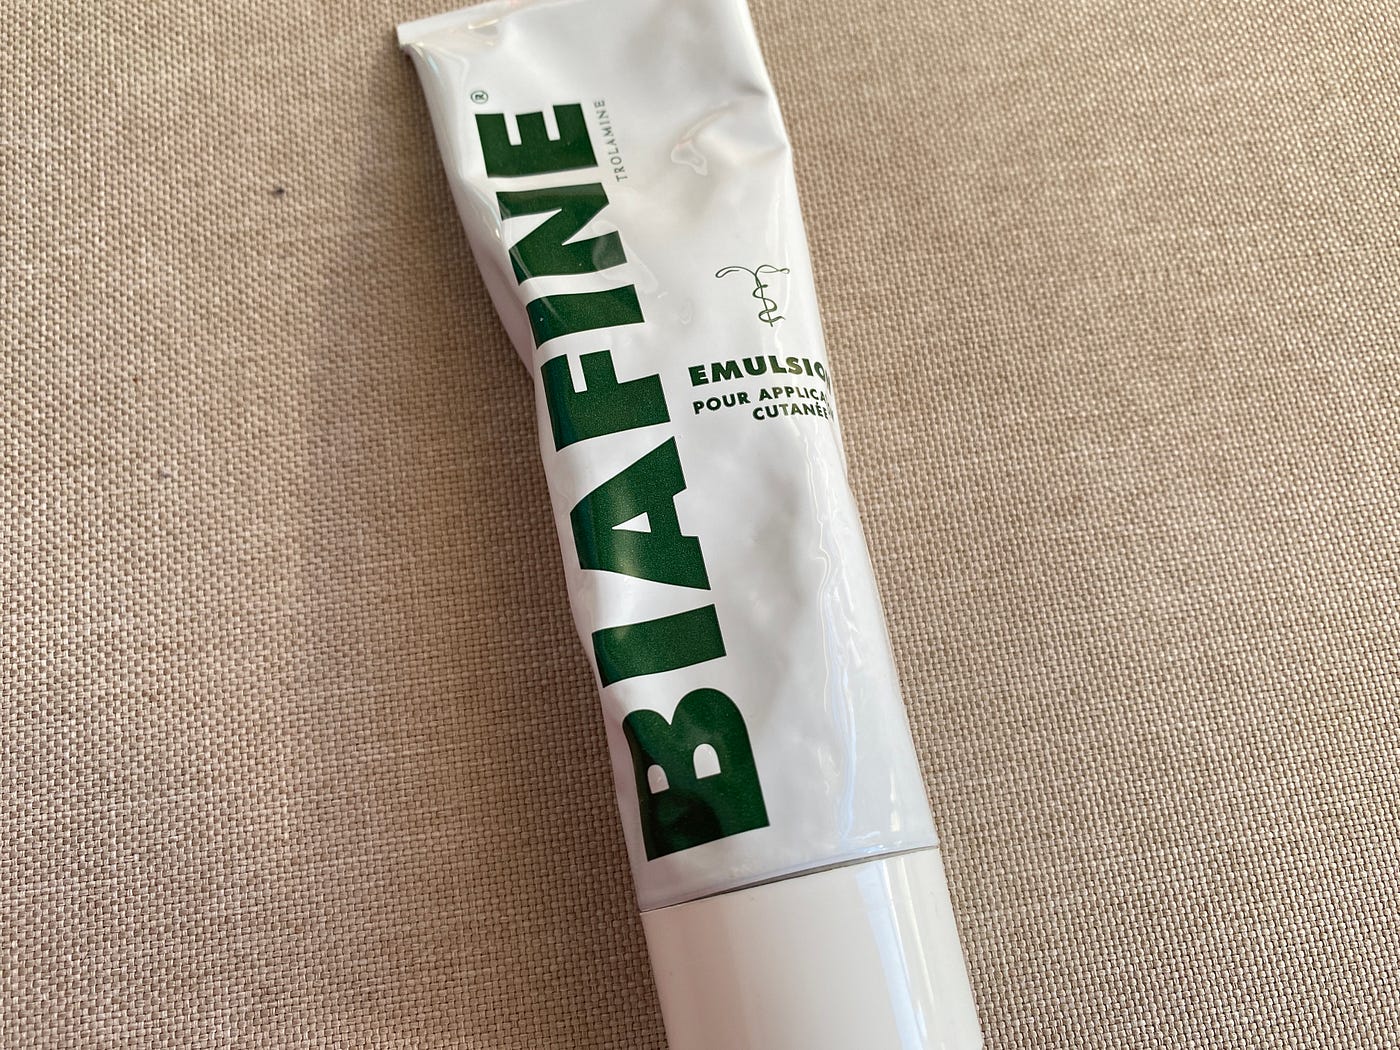 Biafine, The New Miracle Beauty Product, Or A Dangerous TikTok Trend?, by  Anique Van de Put